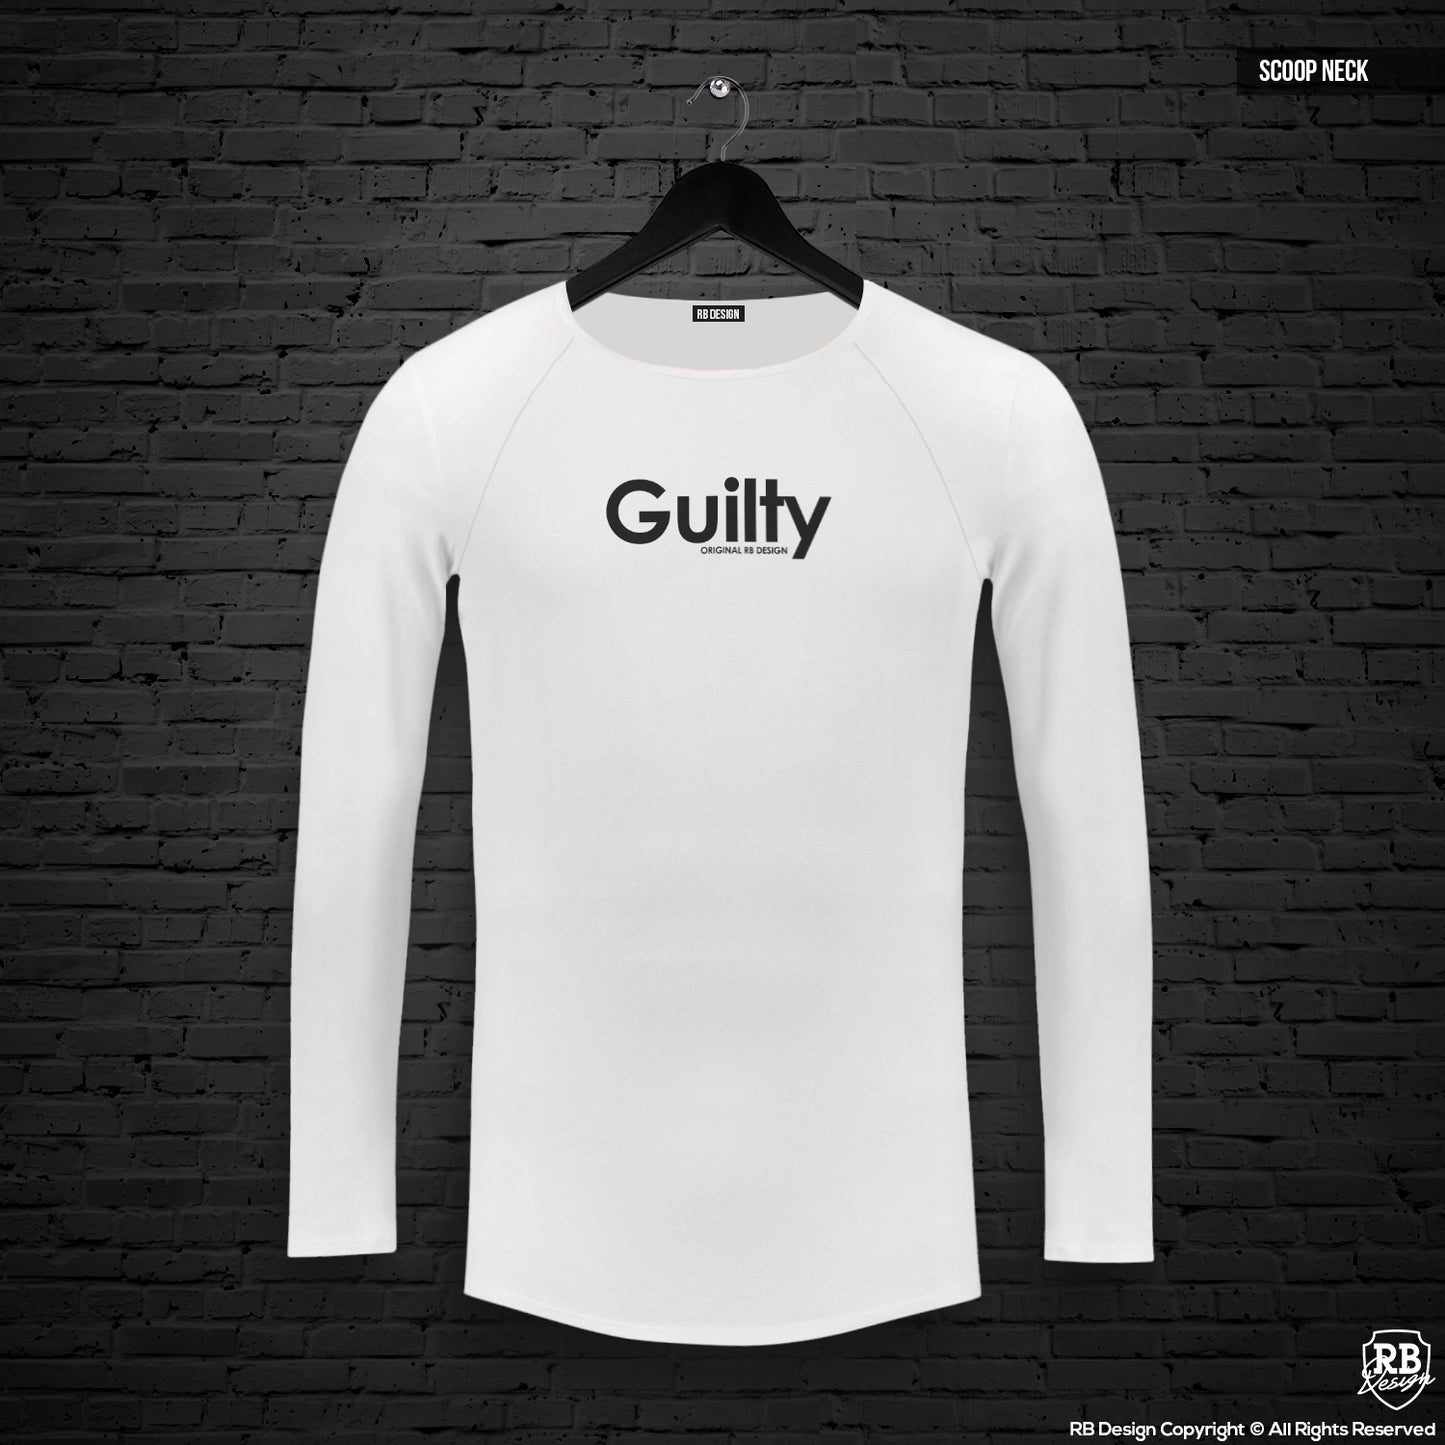 Mens Long Sleeve T-shirt "Guilty" MD964